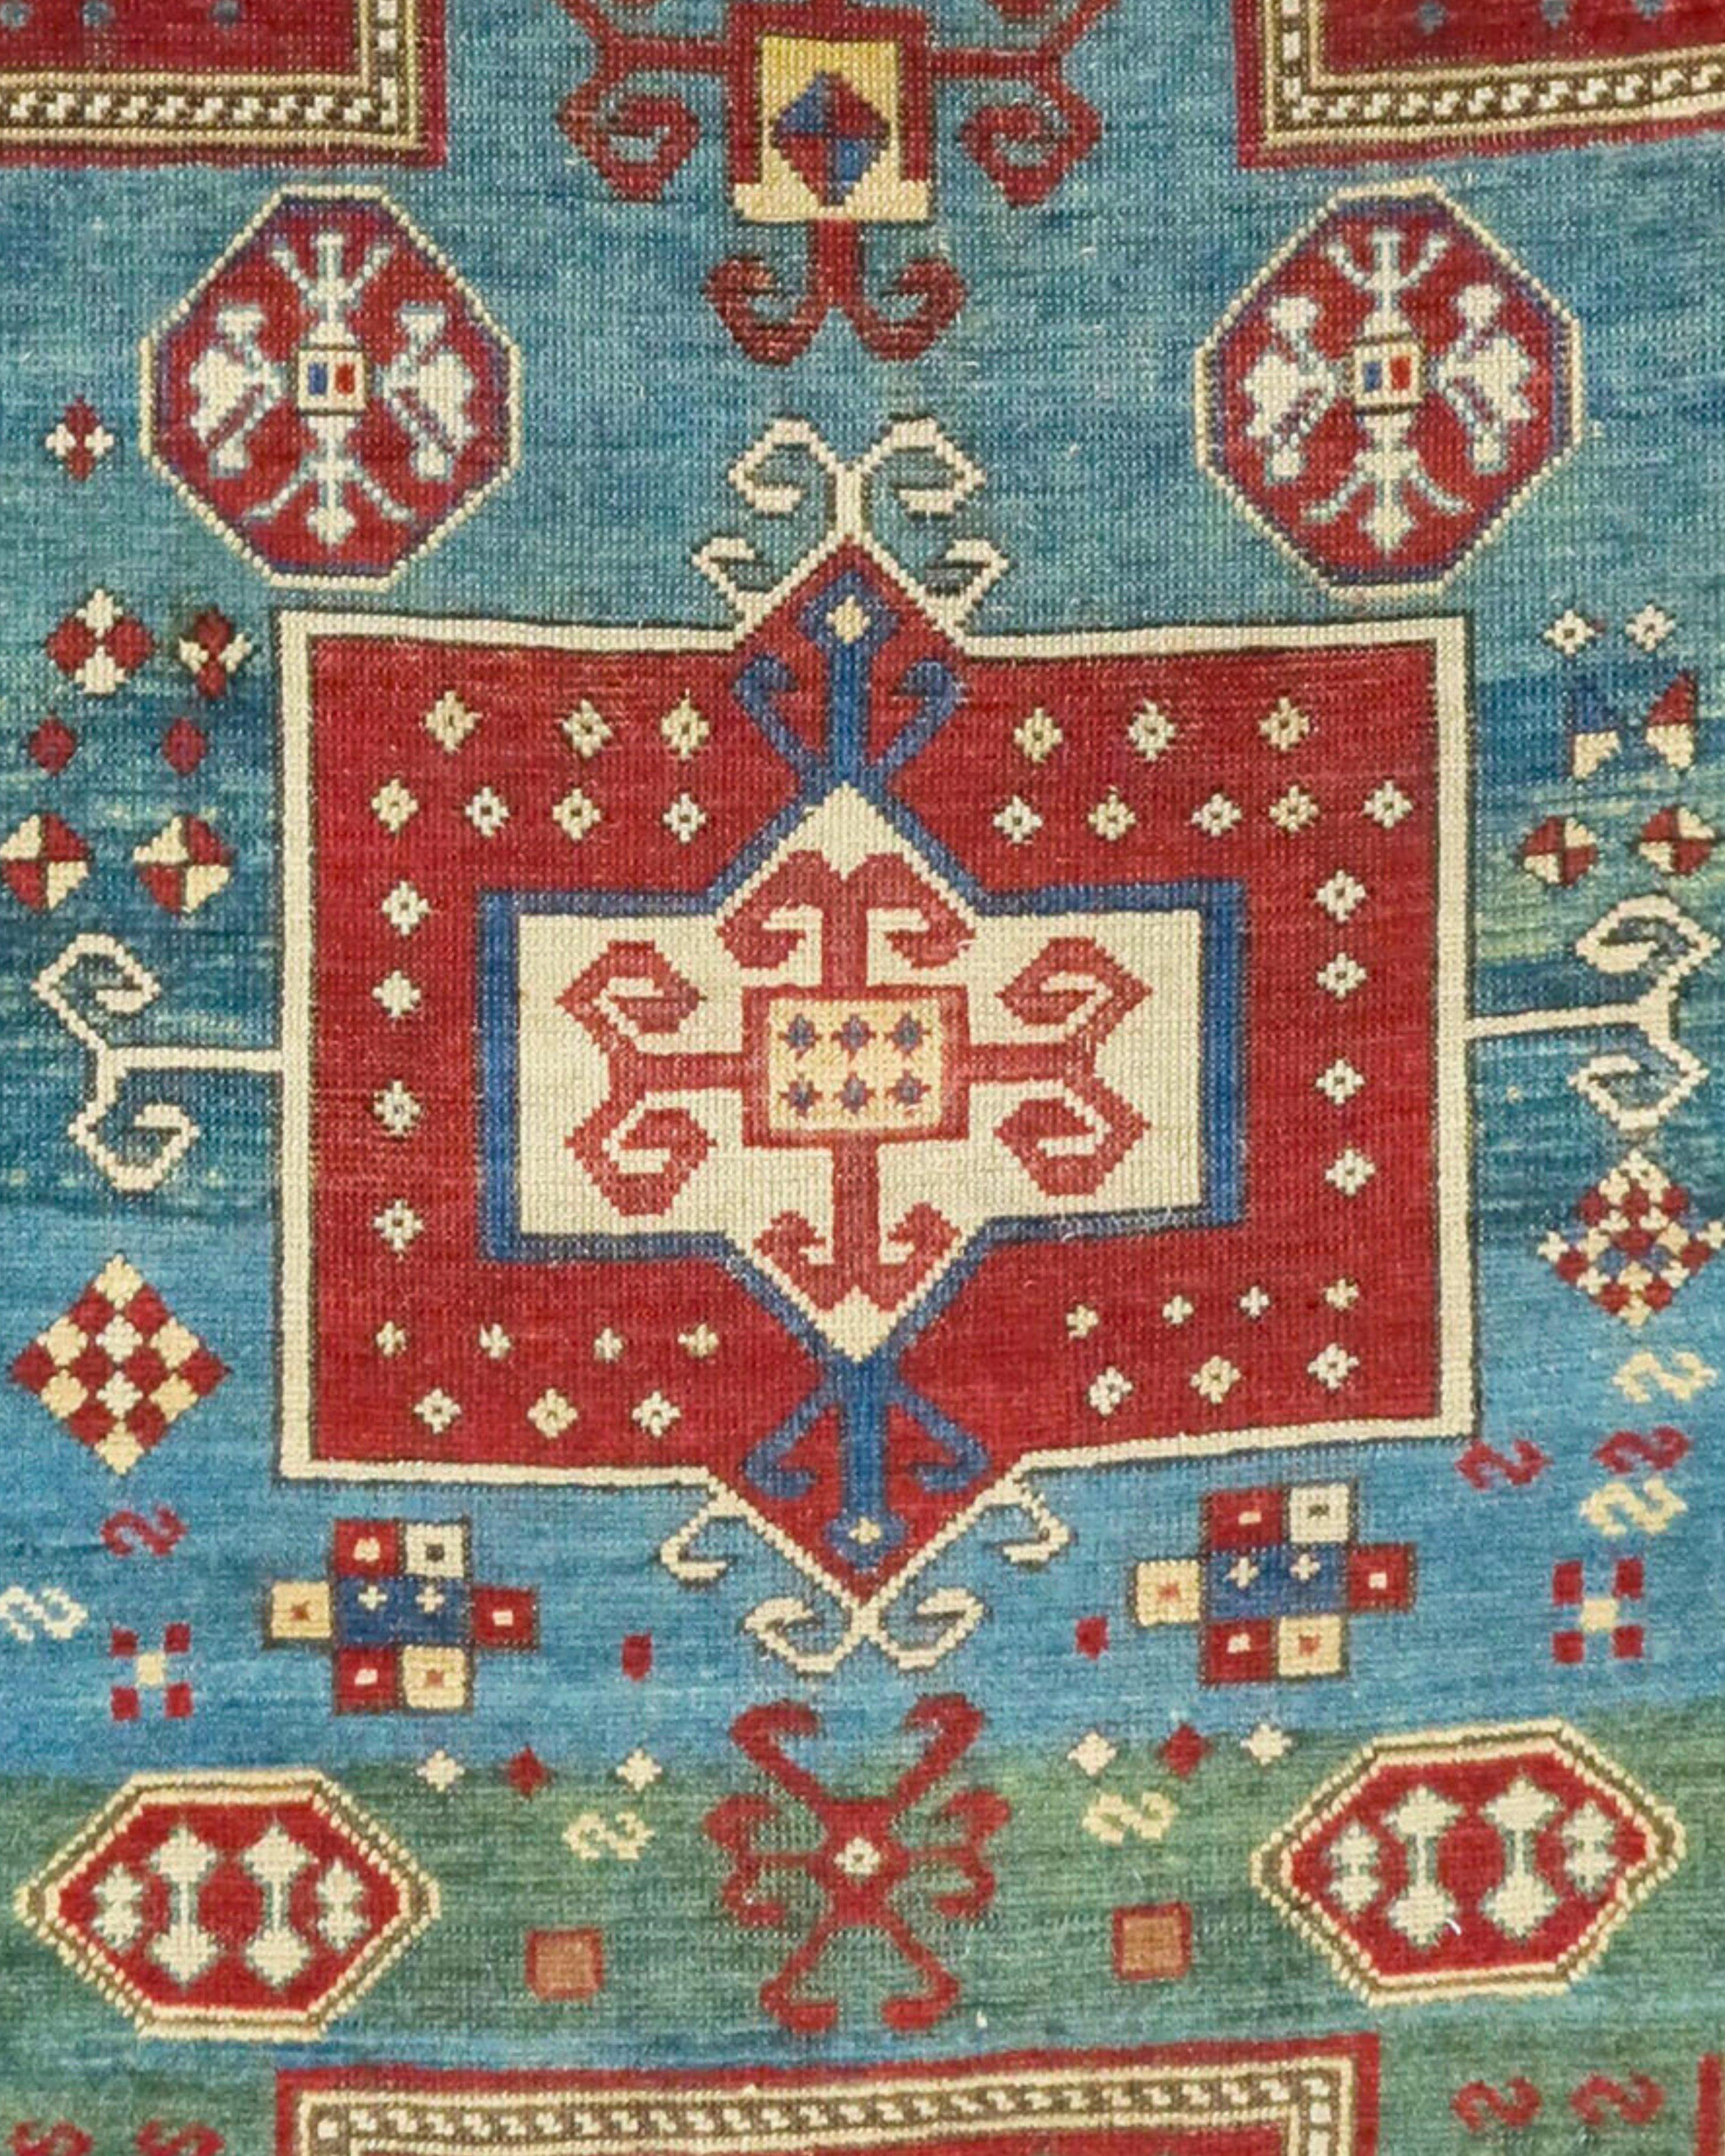 Antique Caucasian Fachralo Kazak Prayer Rug, 19th Century

Additional Information:
Dimensions: 3'6